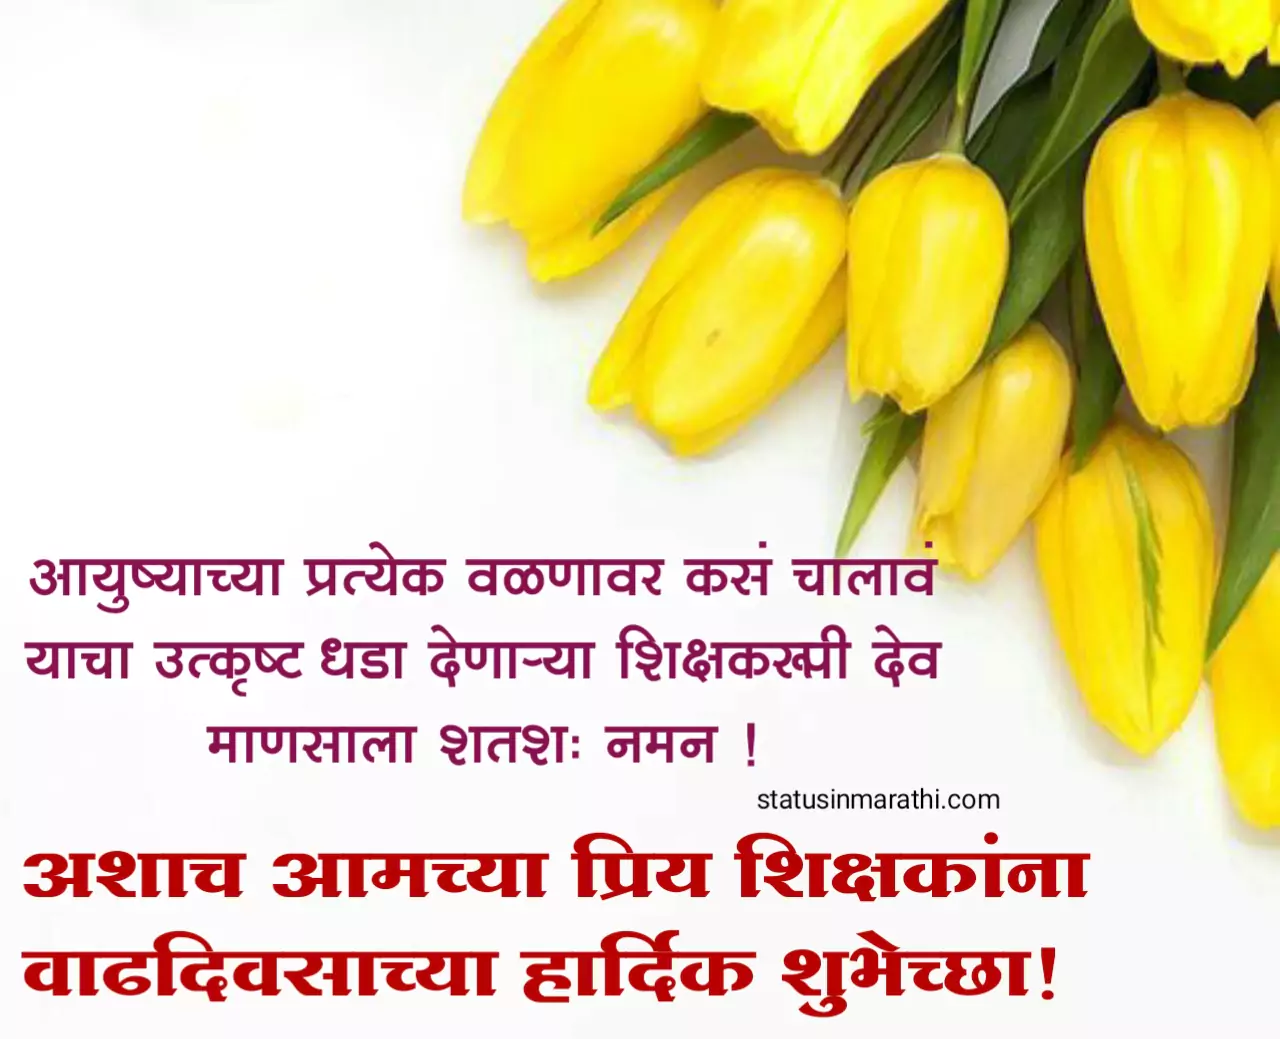 Happy Birthday wishes for teacher in marathi